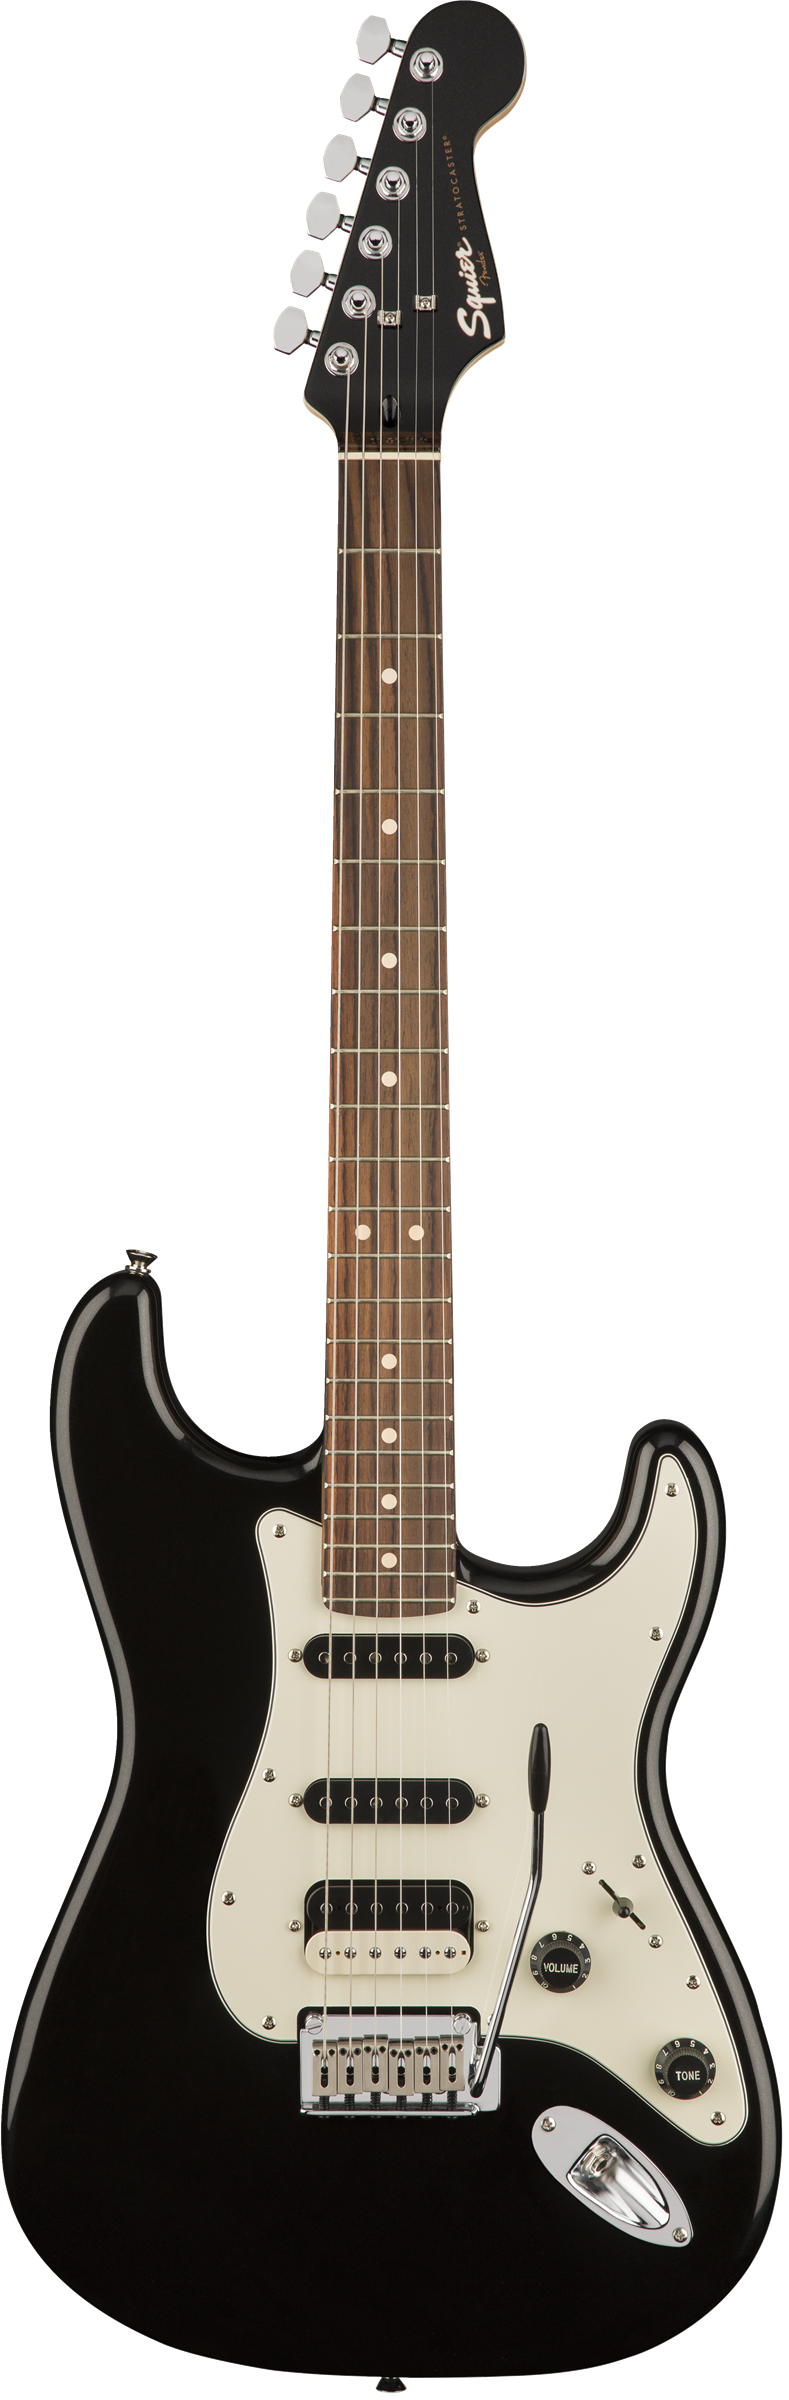 Squier Contemporary Stratocaster Electric Guitar - Black Metallic